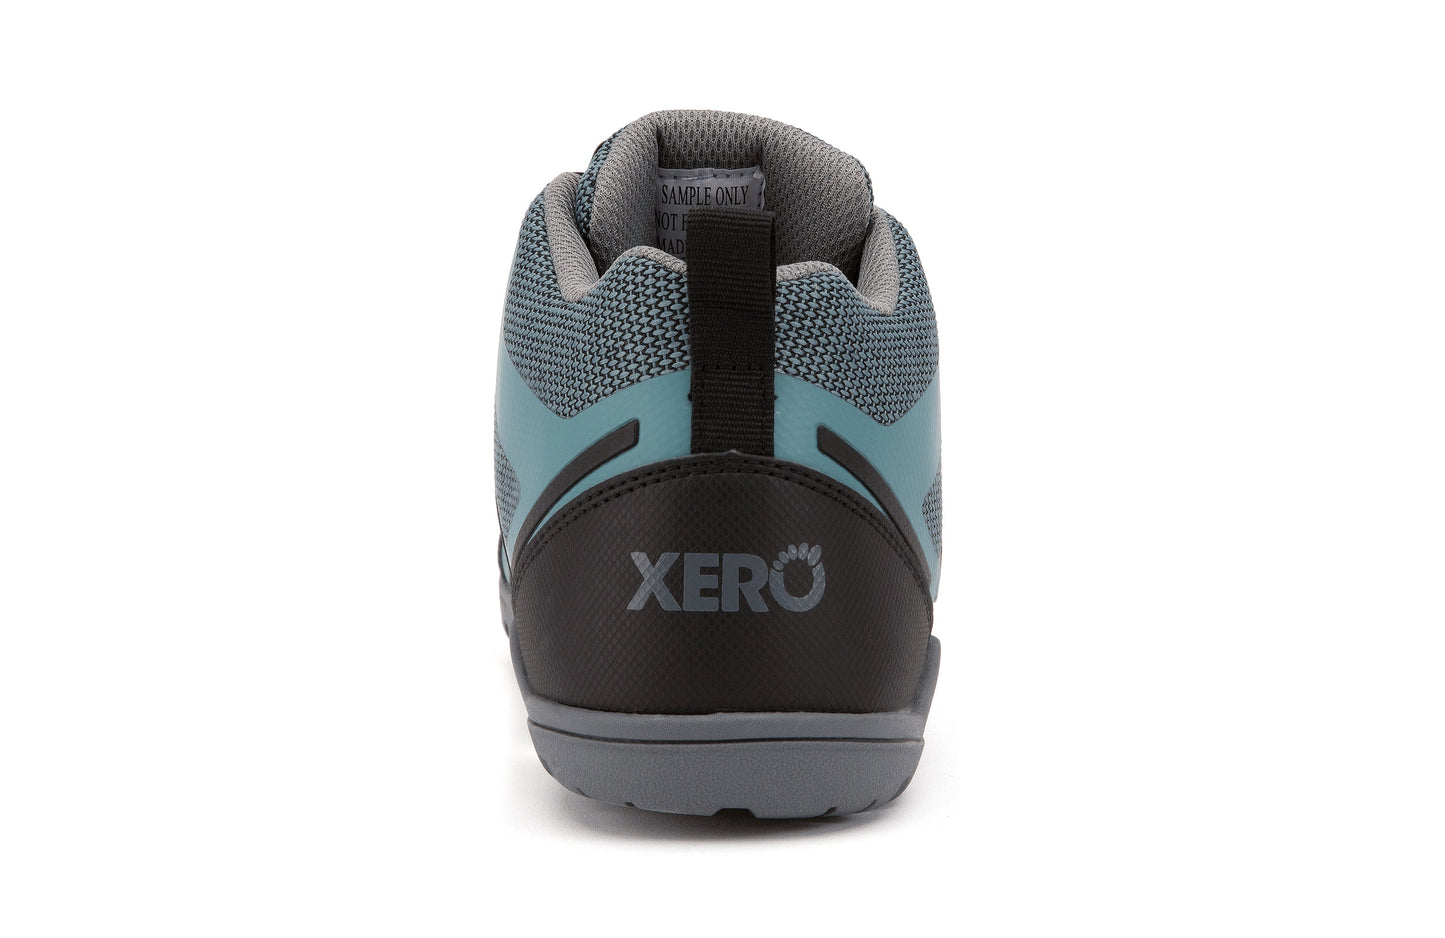 Xero Shoes Daylite Hiker Fusion Womens barfods vandrestøvler til kvinder i farven arctic blue / asphalt, bagfra